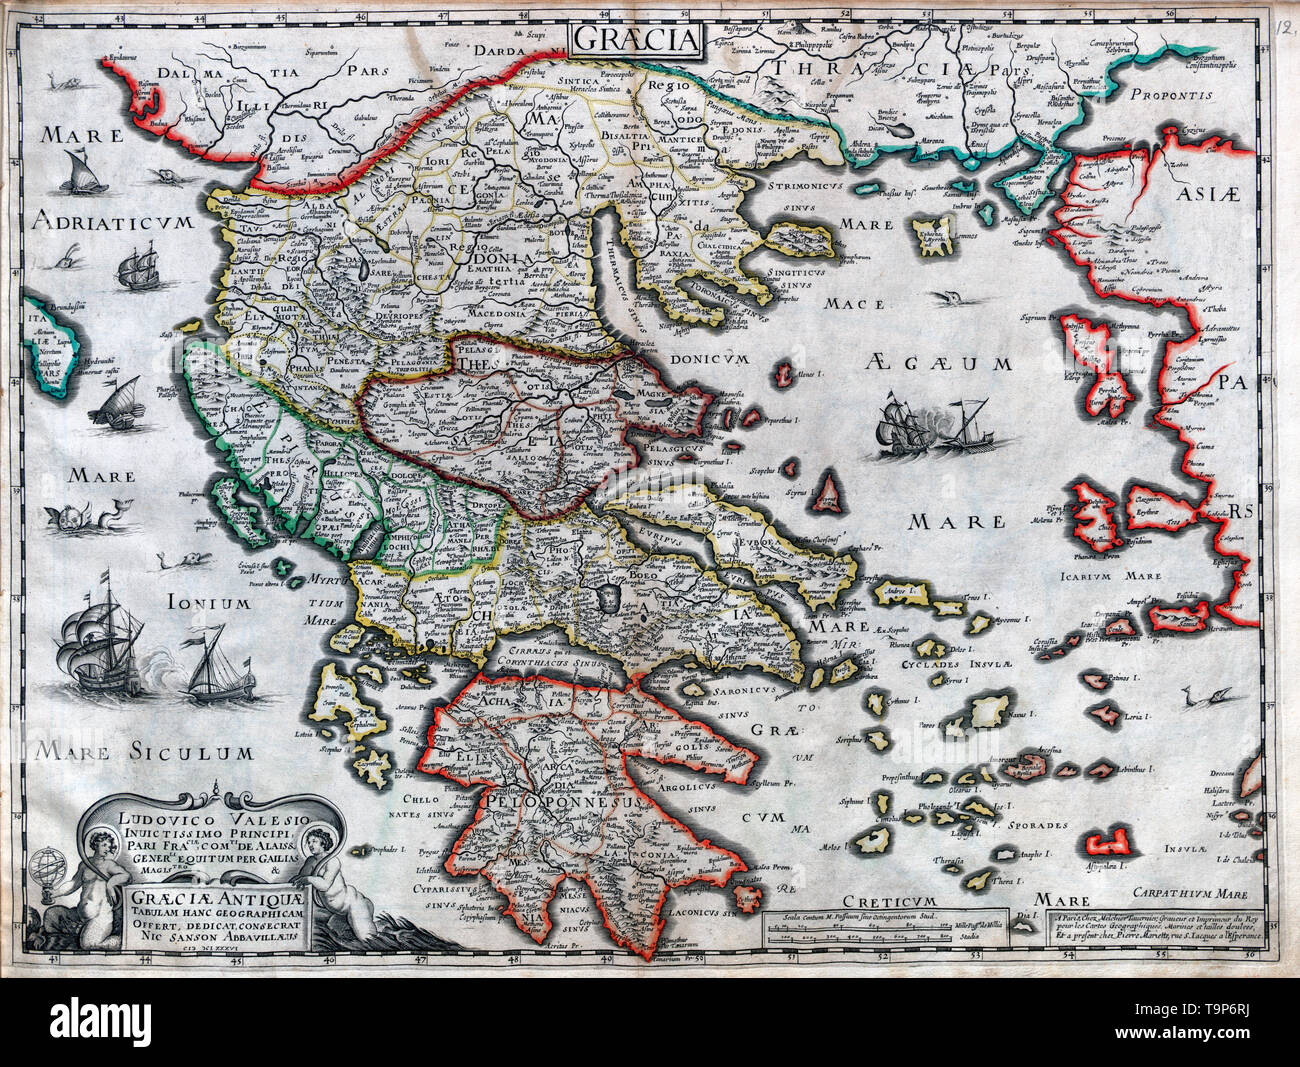 Map of Graeciae Antique - Sanson Atlas, circa 1700 Stock Photo